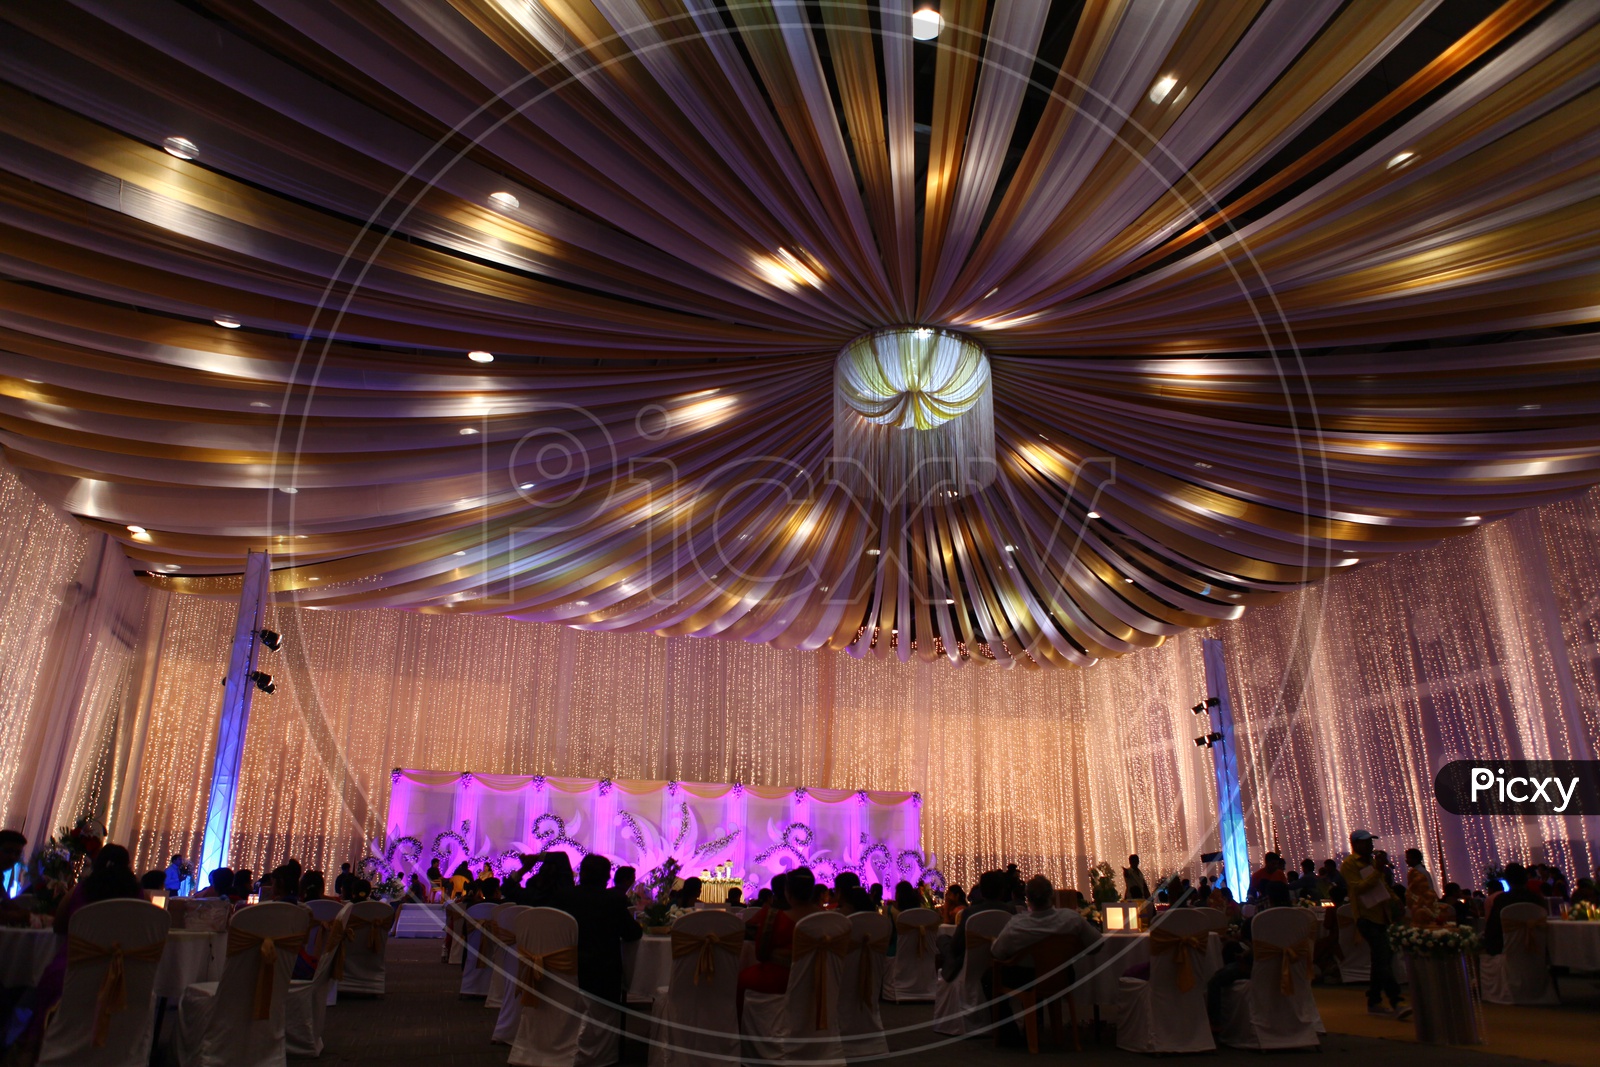 Indian Wedding Hall Decoration